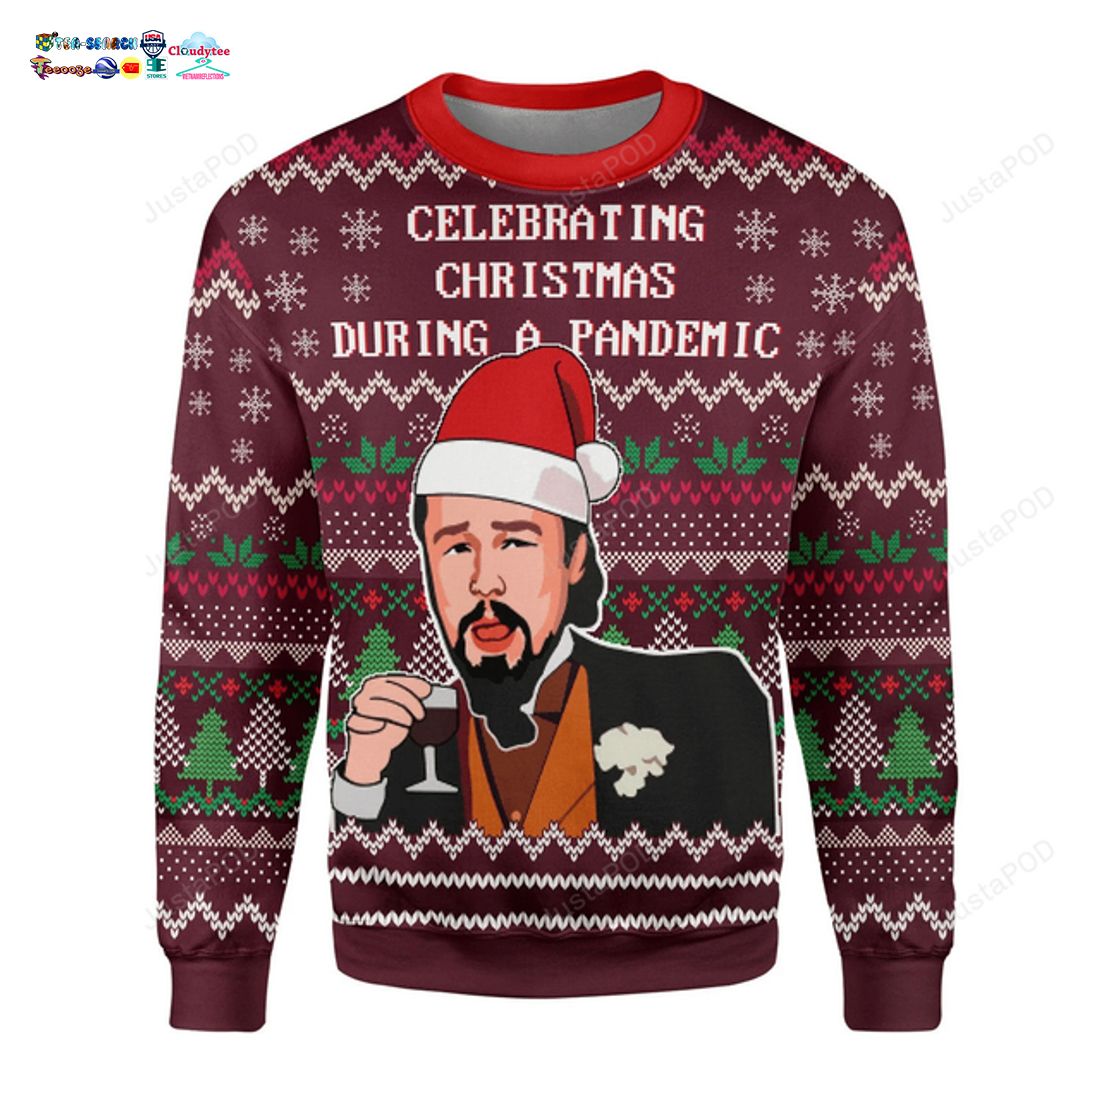 leonardo-dicaprio-celebrating-christmas-during-a-pandemic-ugly-christmas-sweater-1-WPkji.jpg